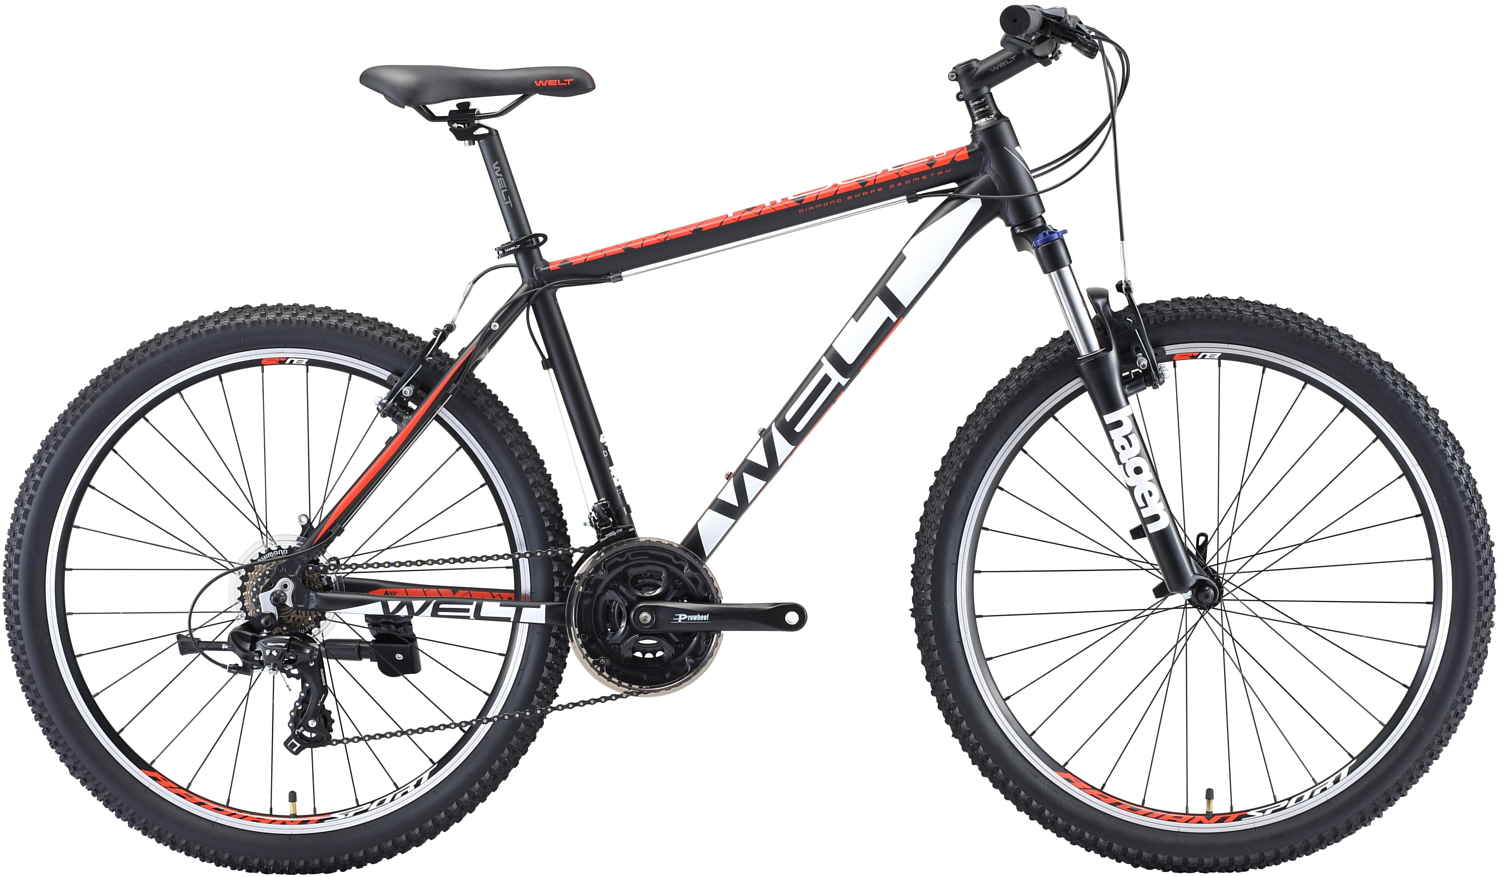 Велосипед Welt Ridge 1.0 V 2019 matt black/white/red